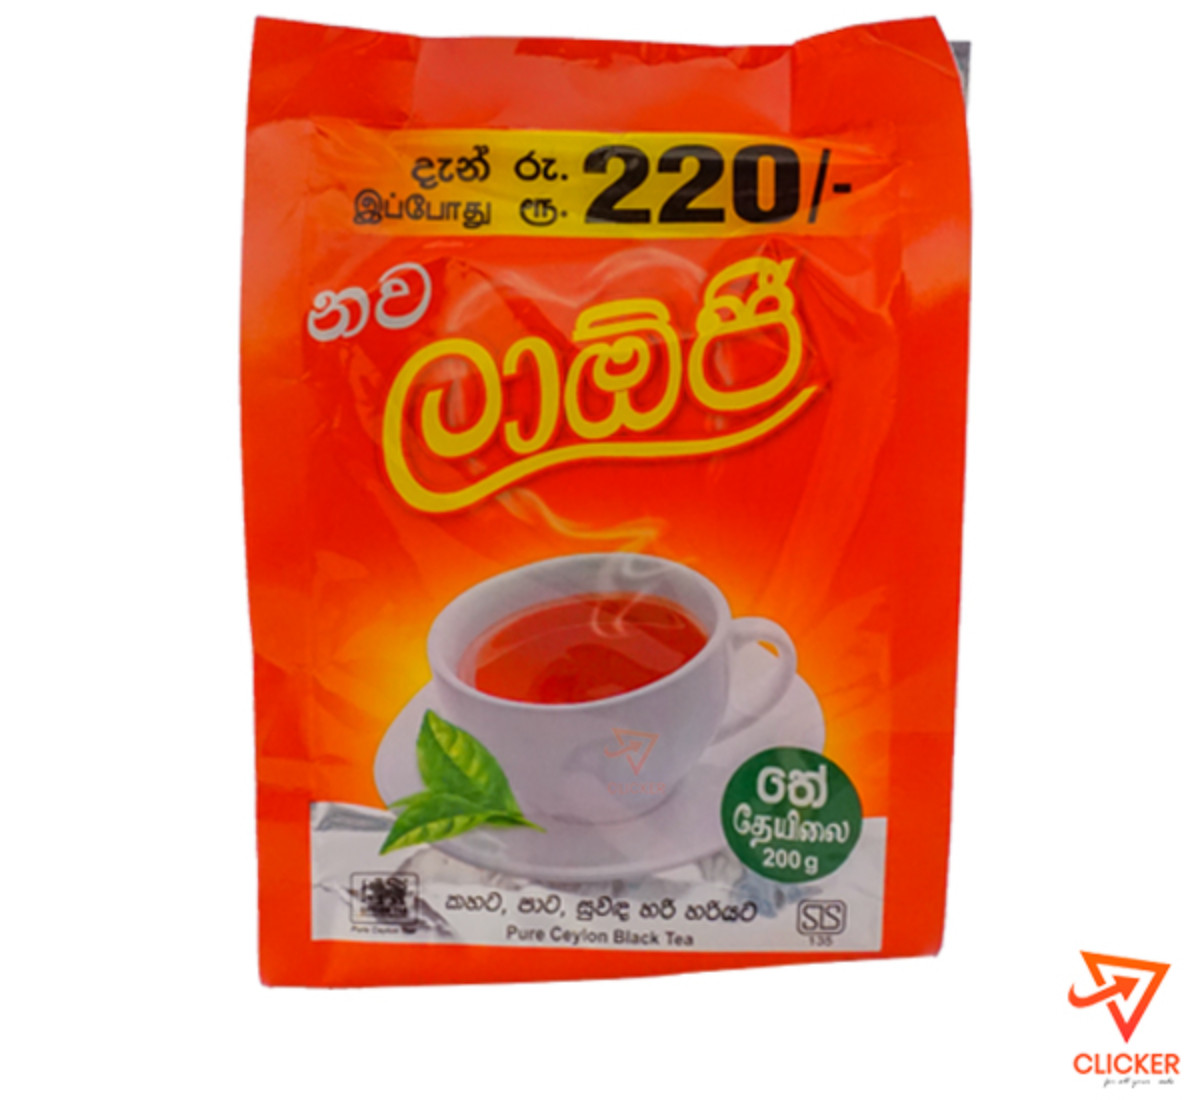 Clicker product 200g LAOJEE Tea 944